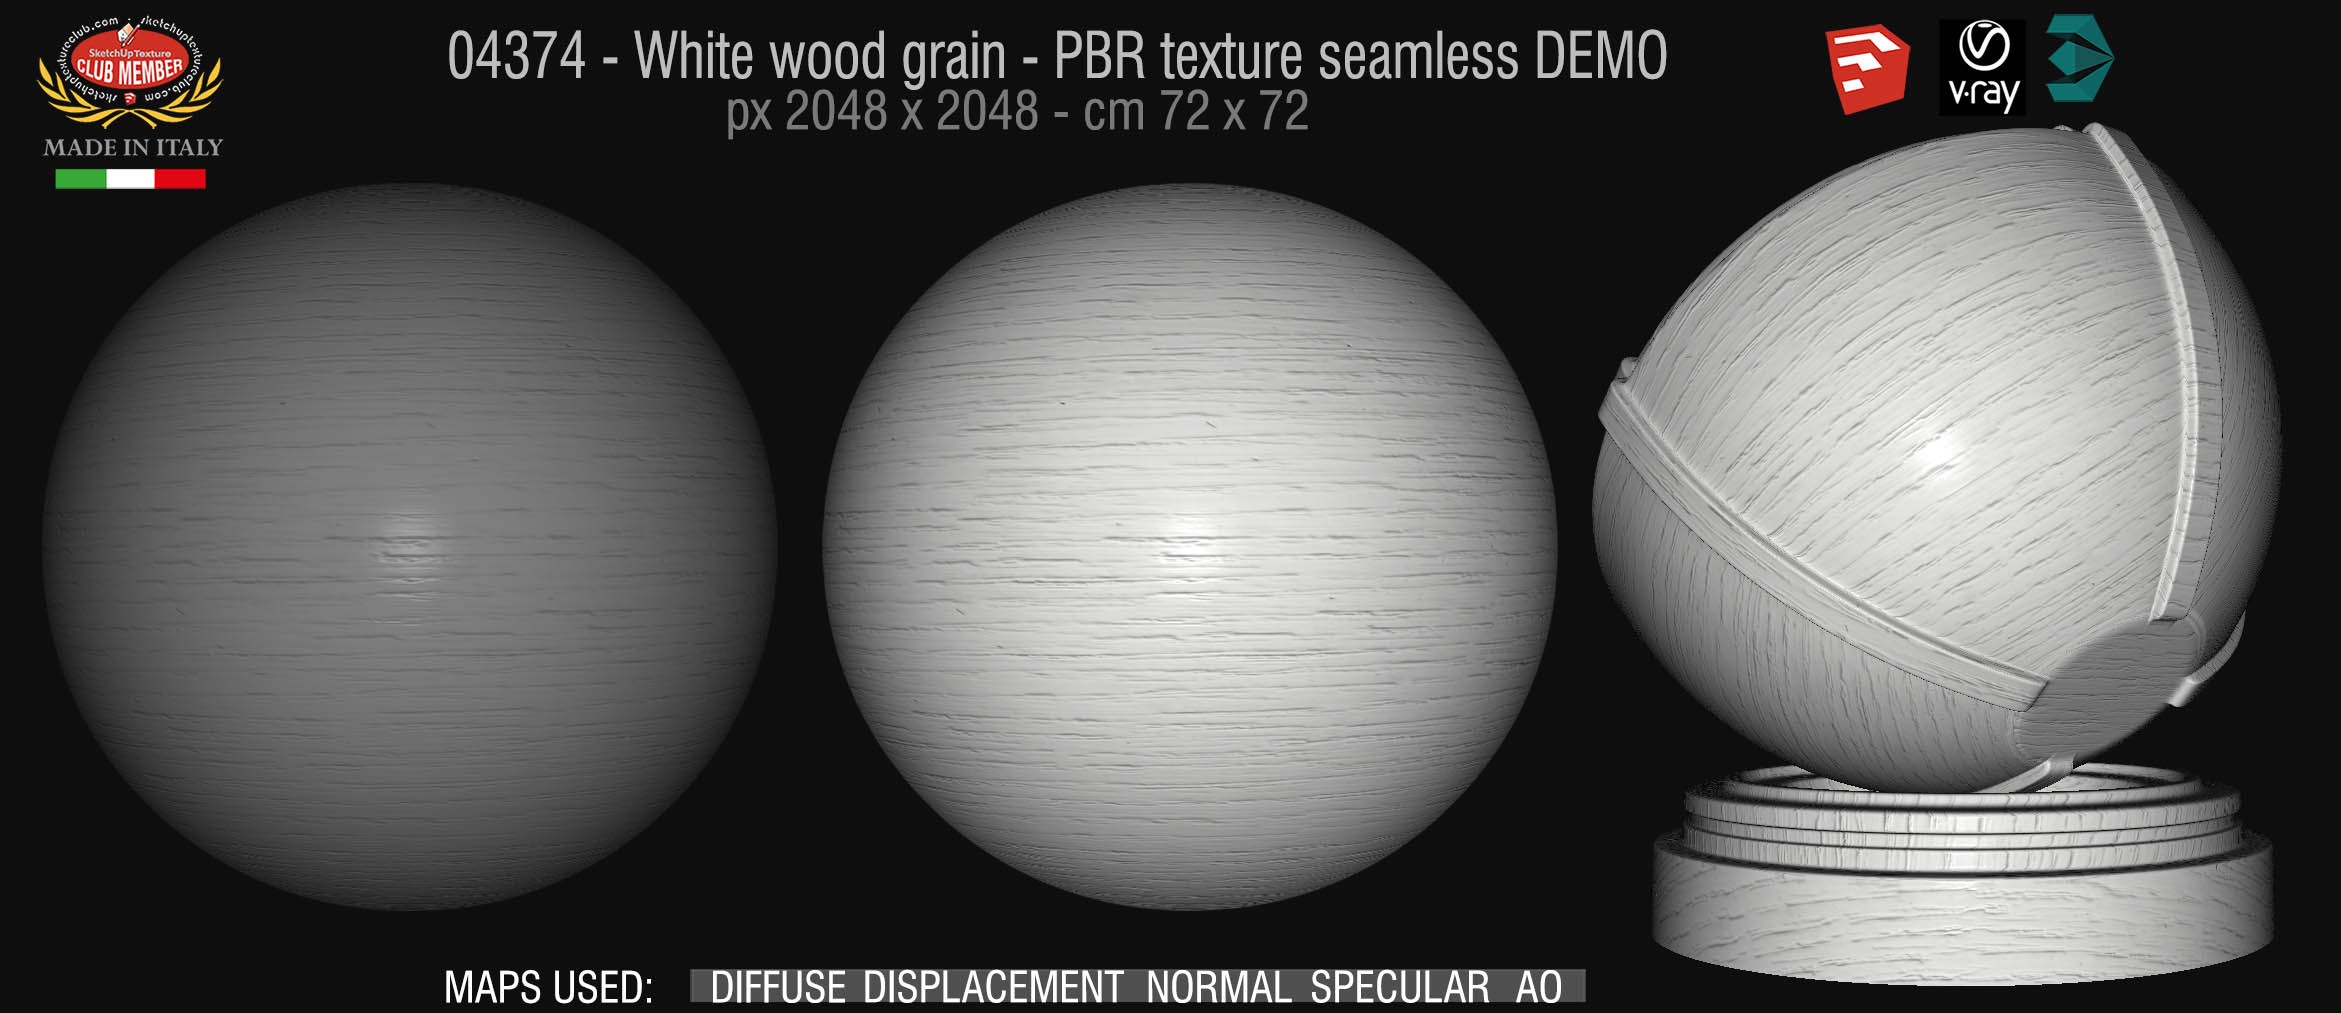 04374 White wood grain - PBR texture seamless DEMO